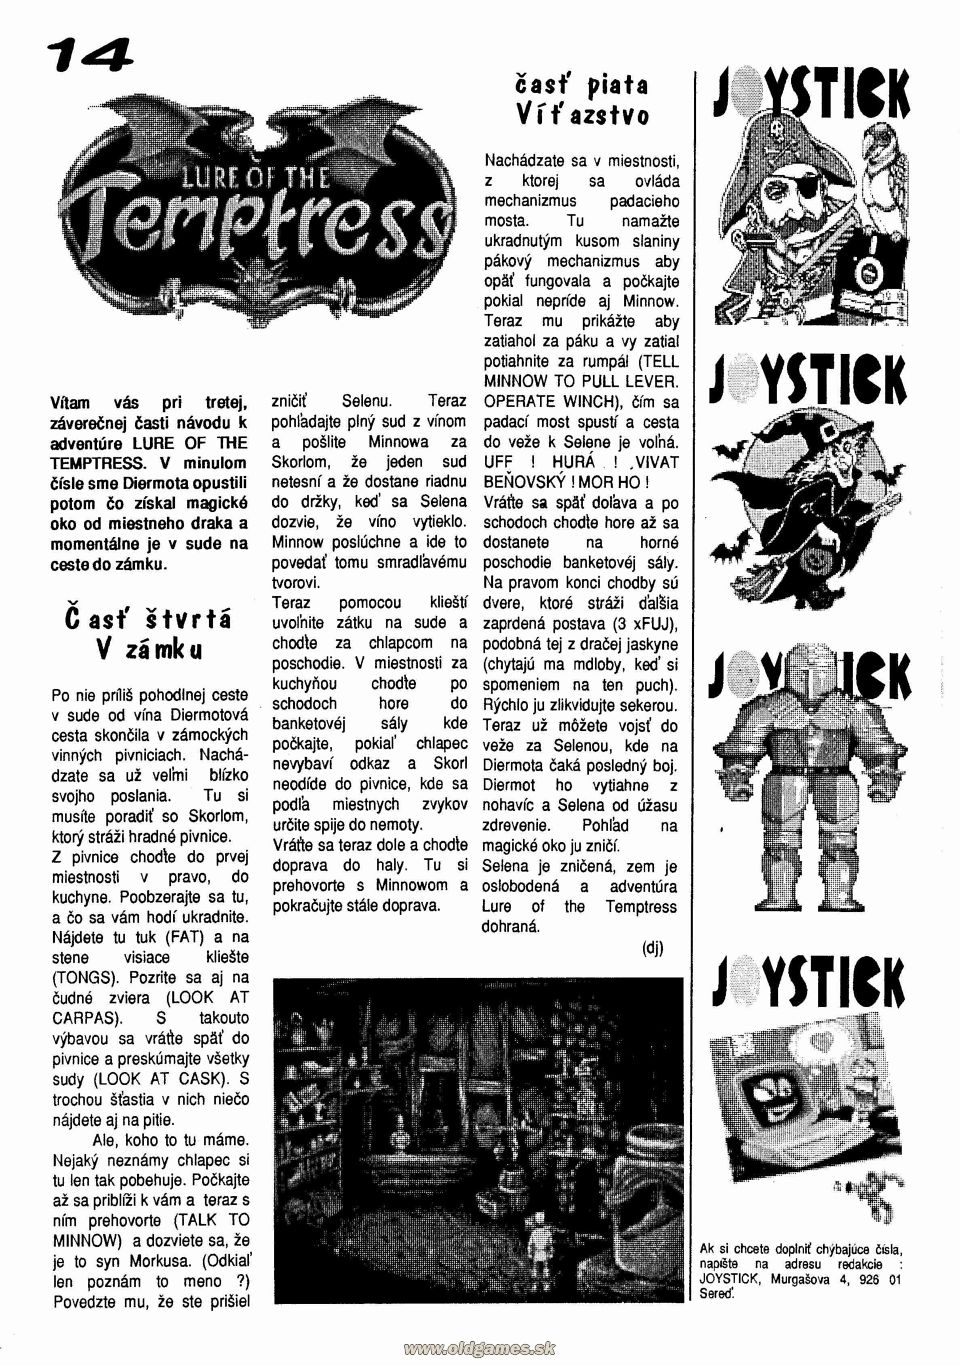 Lure of the Temptress - Návod (3)